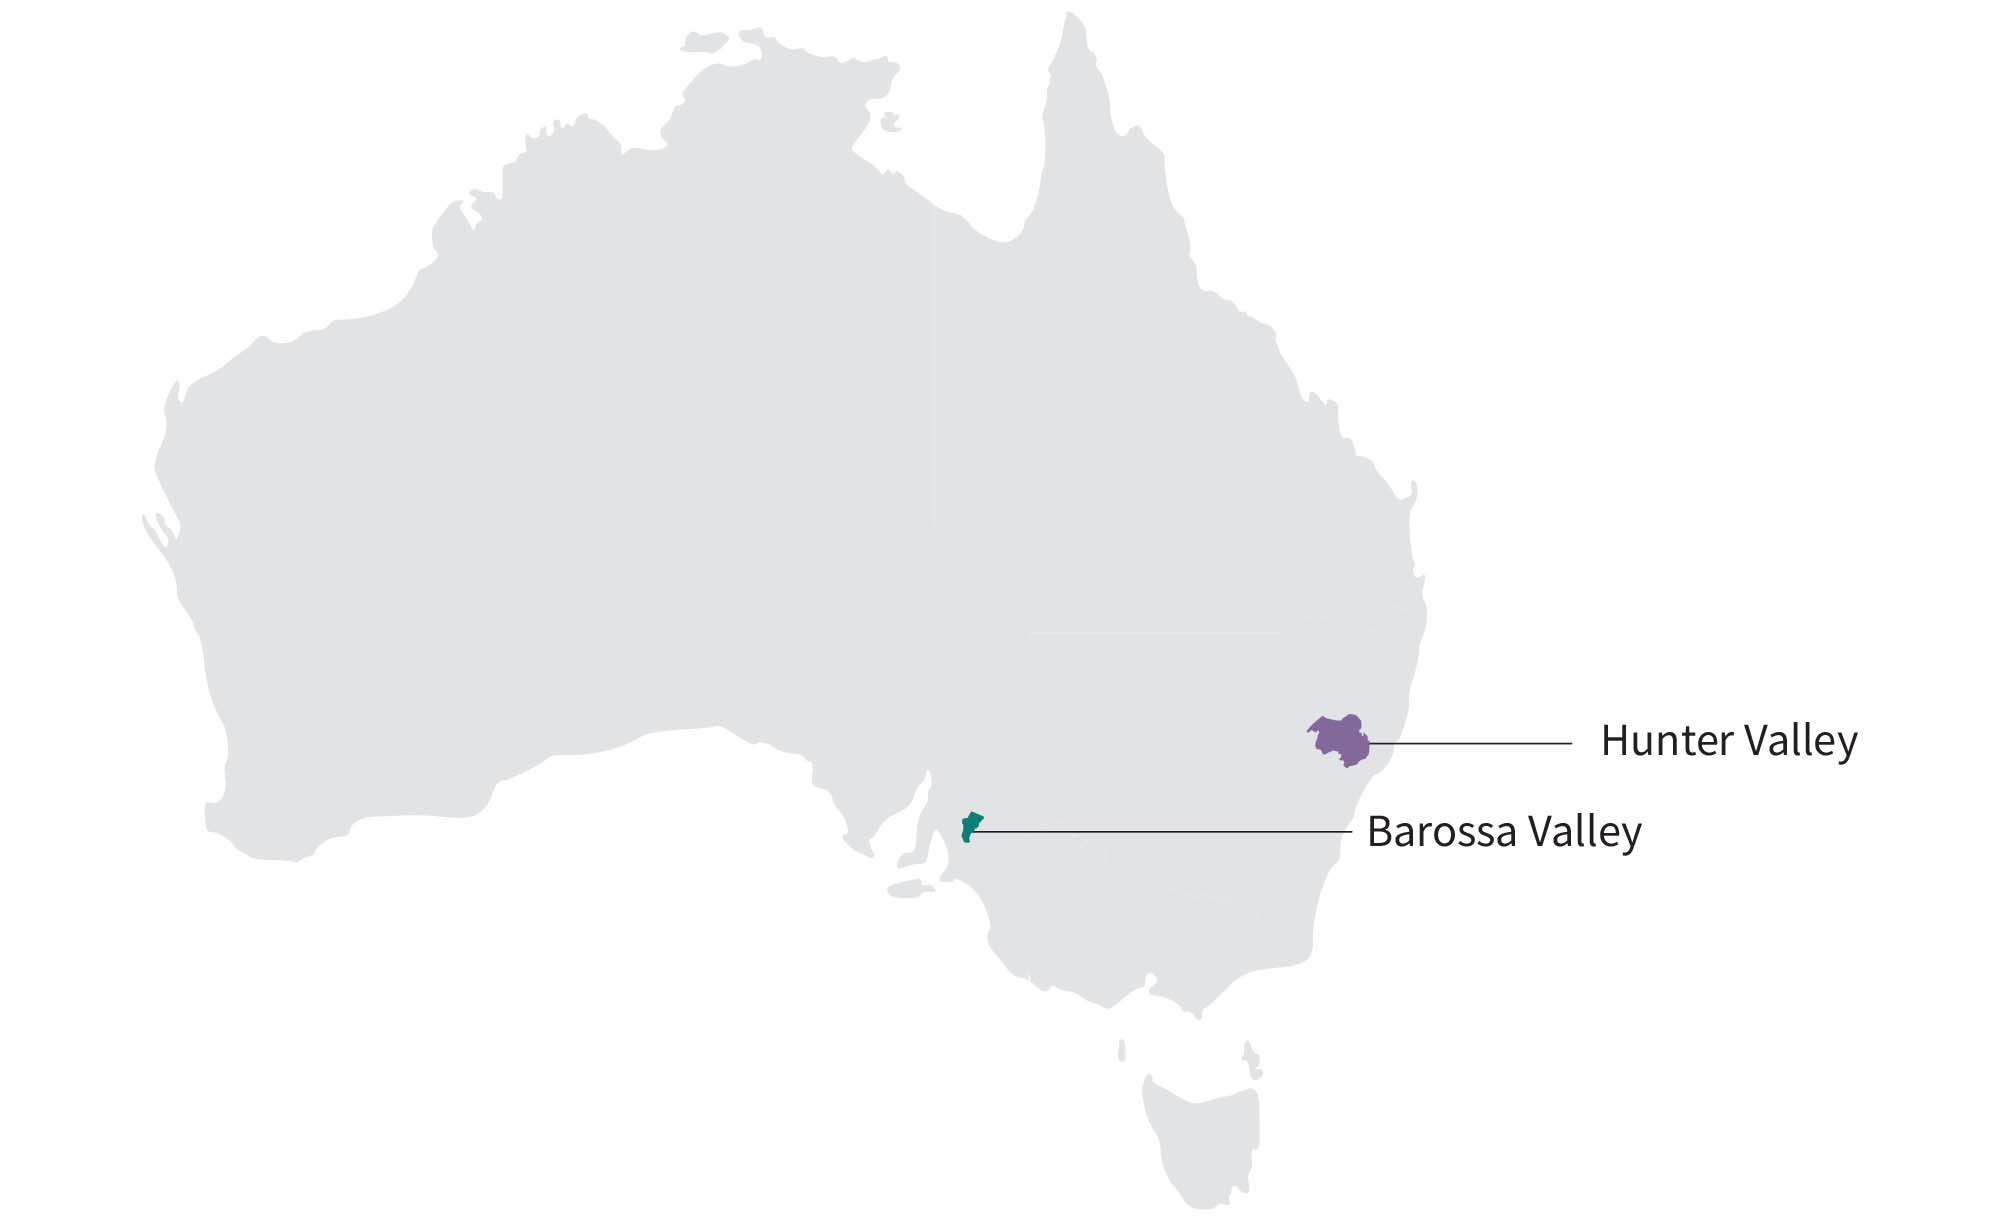 map of shiraz winegrowing regions in Australia: Hunter Valley, Barossa Valley